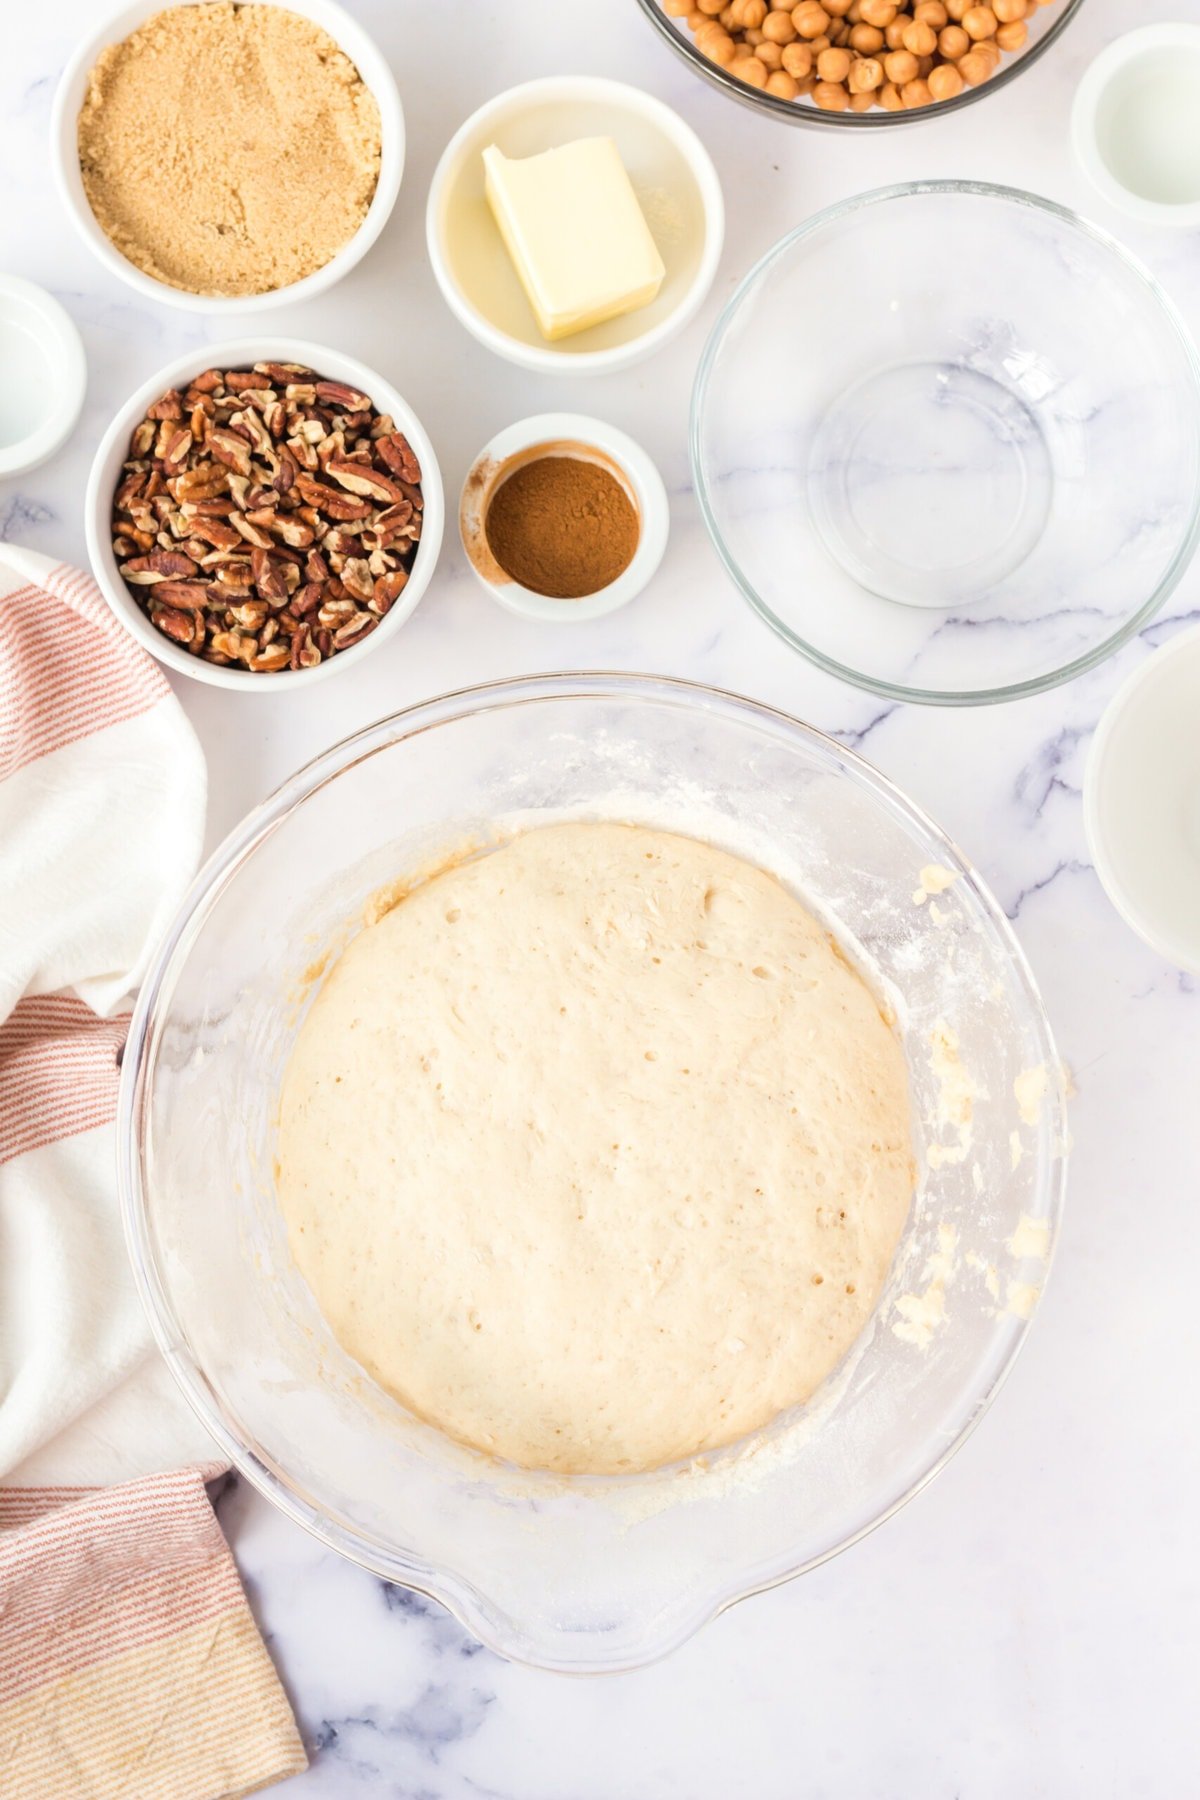 Rising the dough.